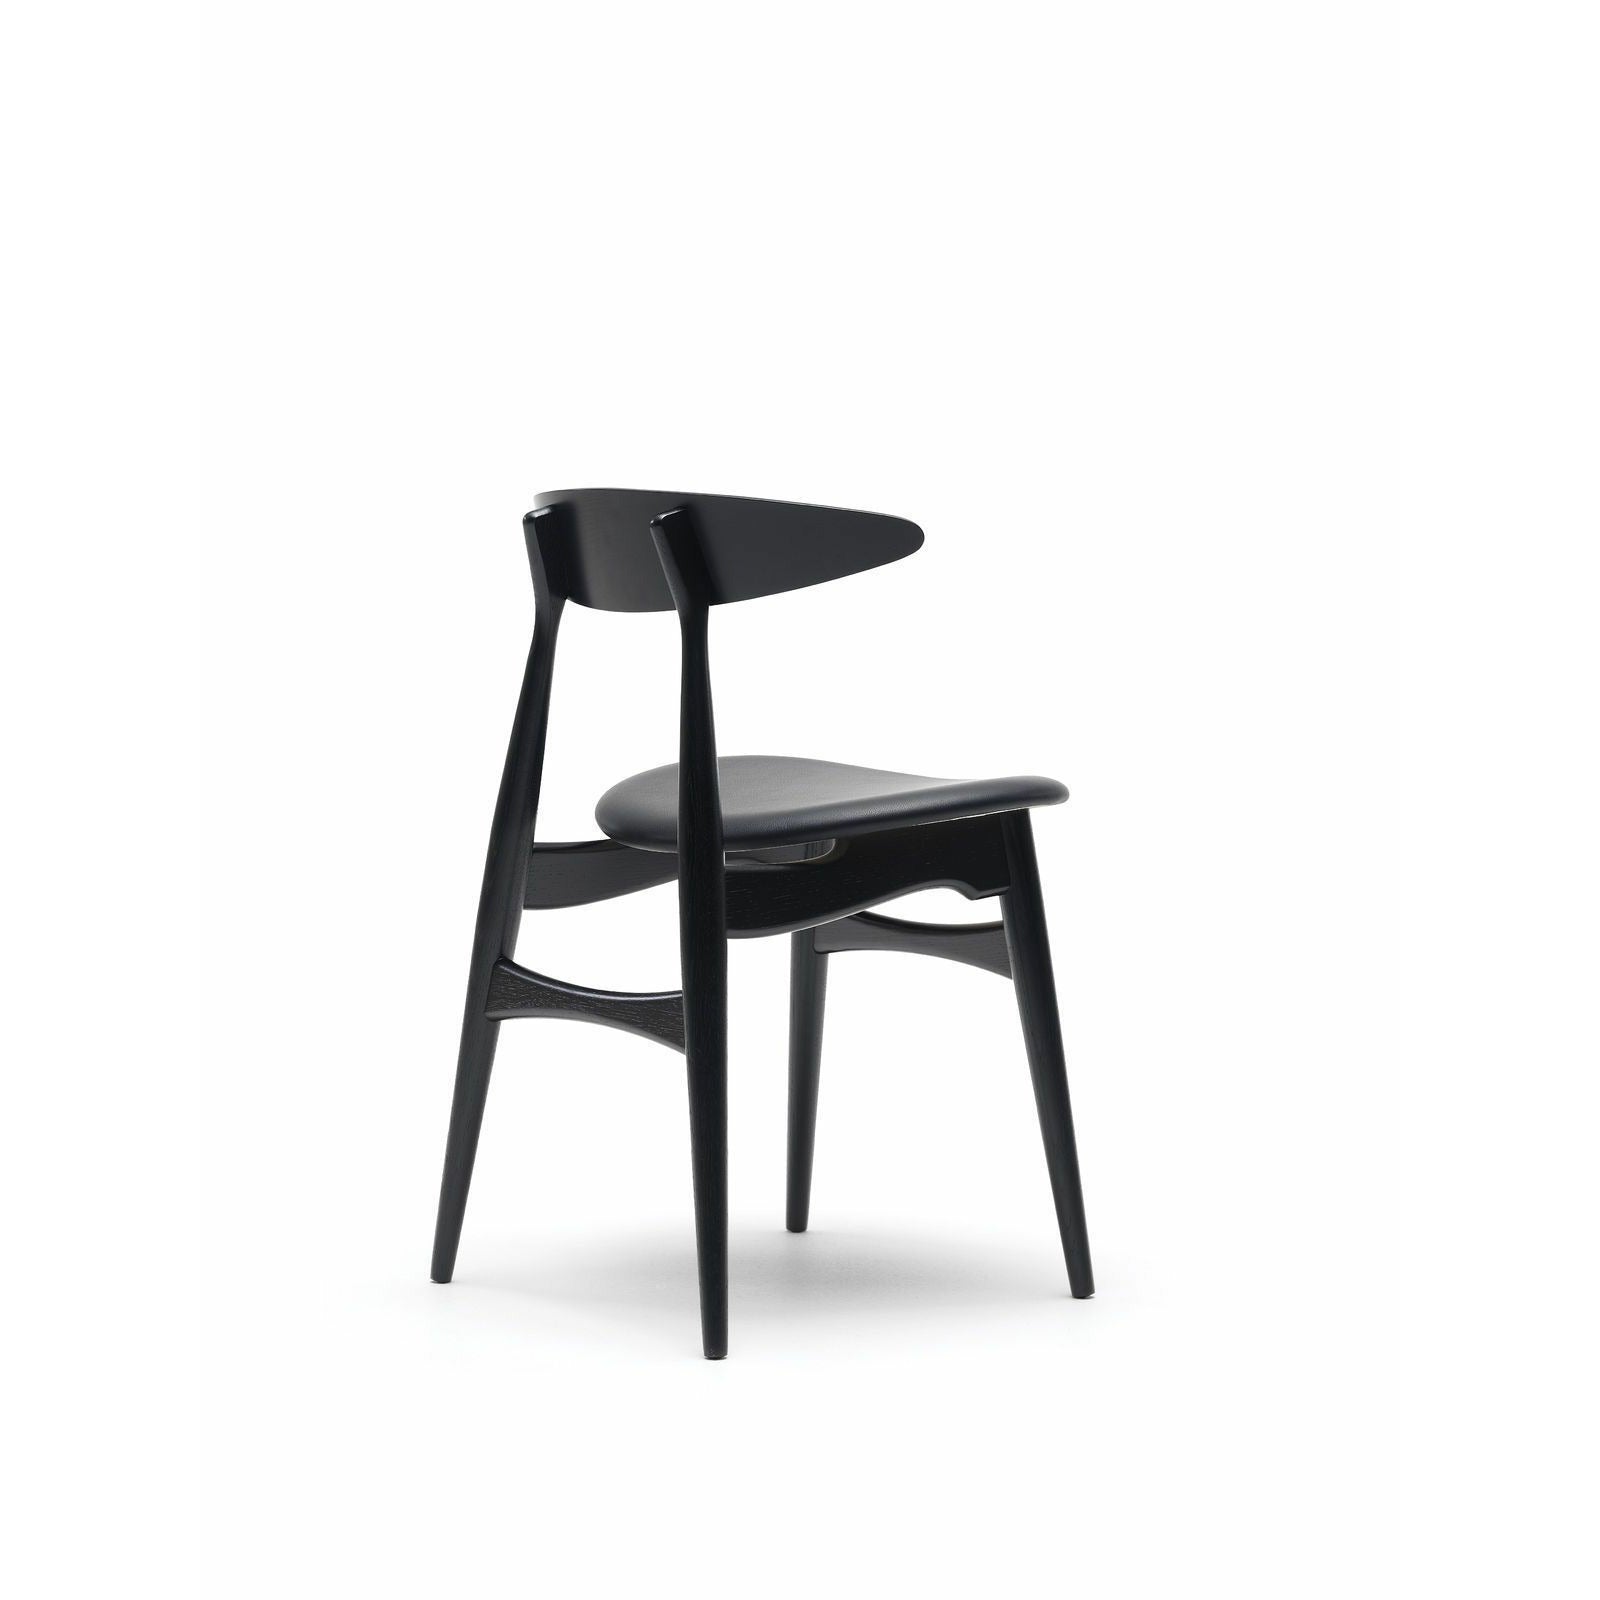 Carl Hansen CH33P -stol, svart bok, svart läder sif 98